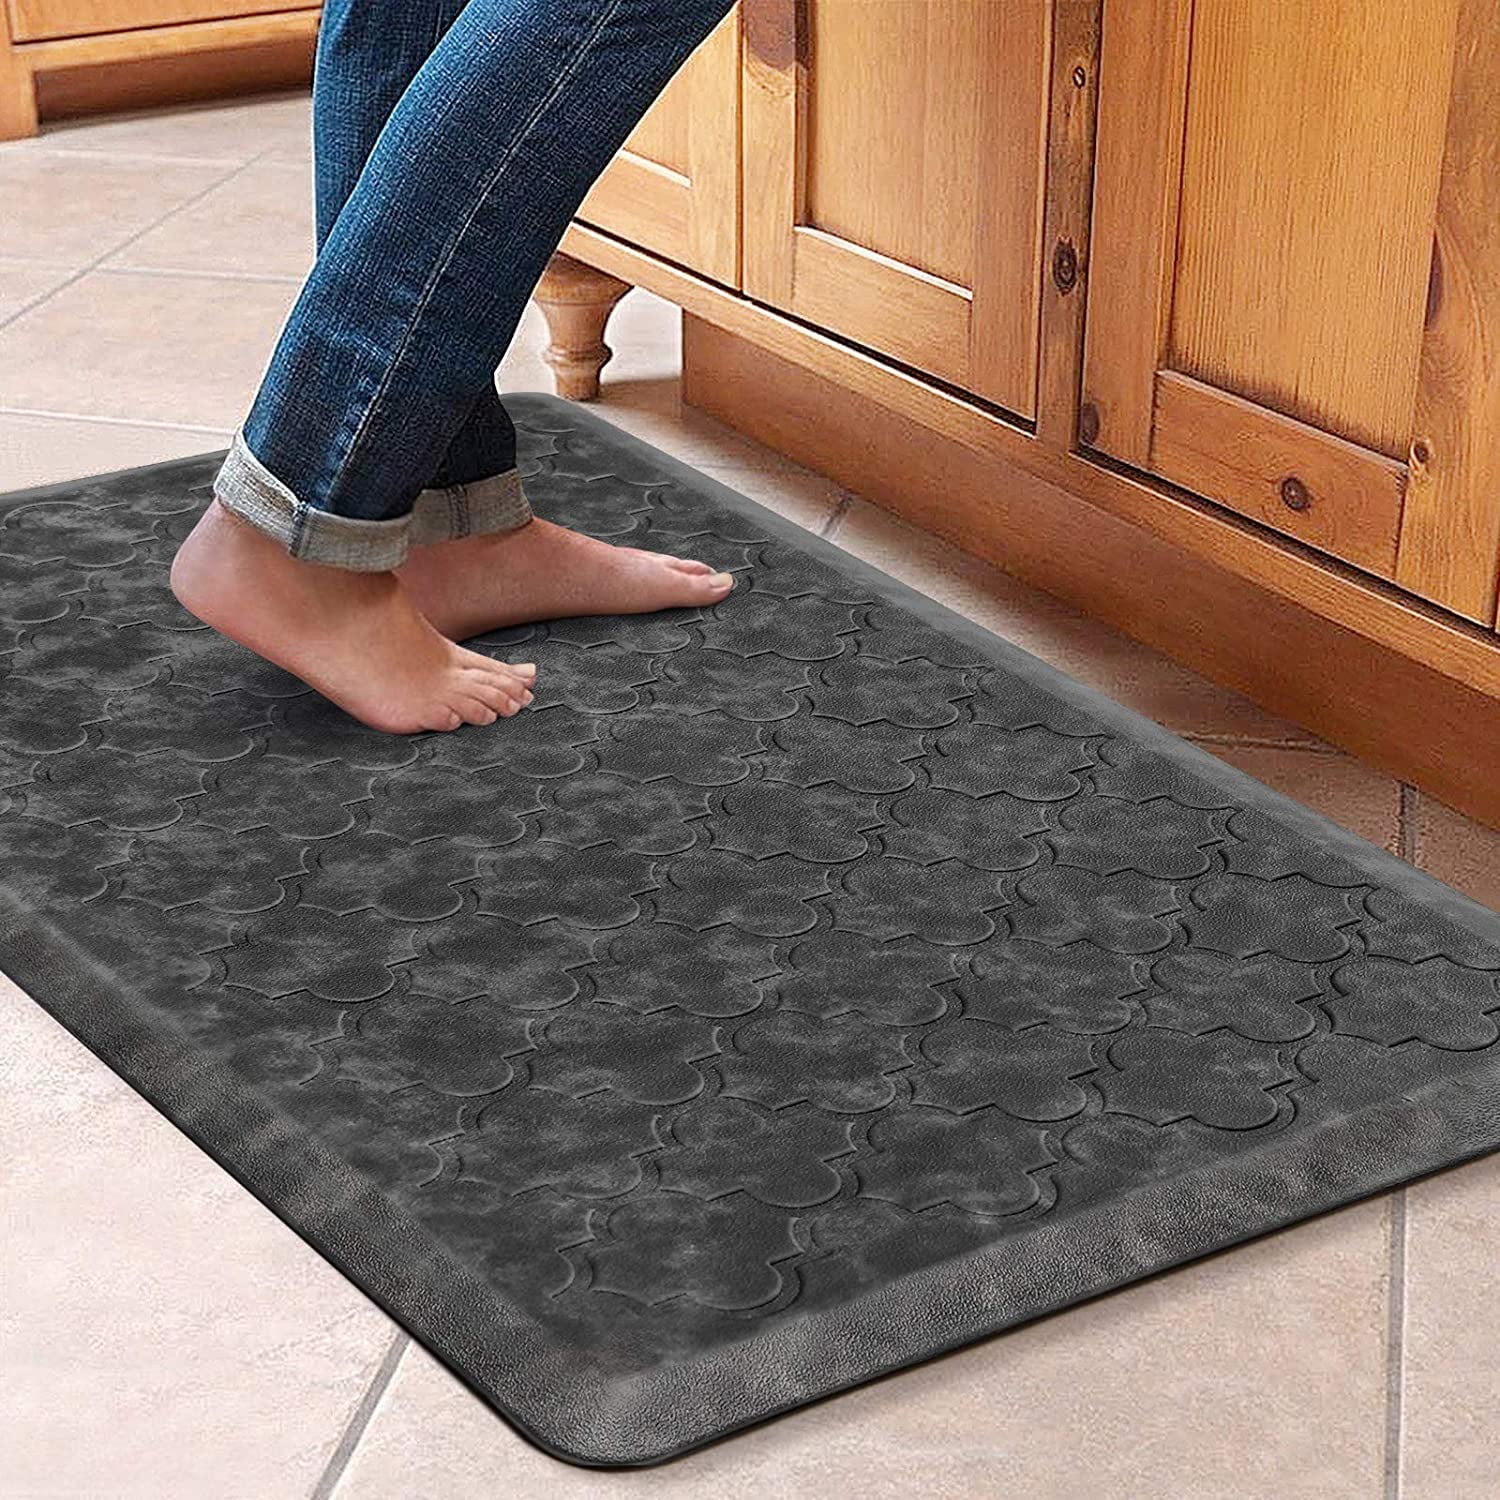 Cushion Flooring For Kitchens – Flooring Tips